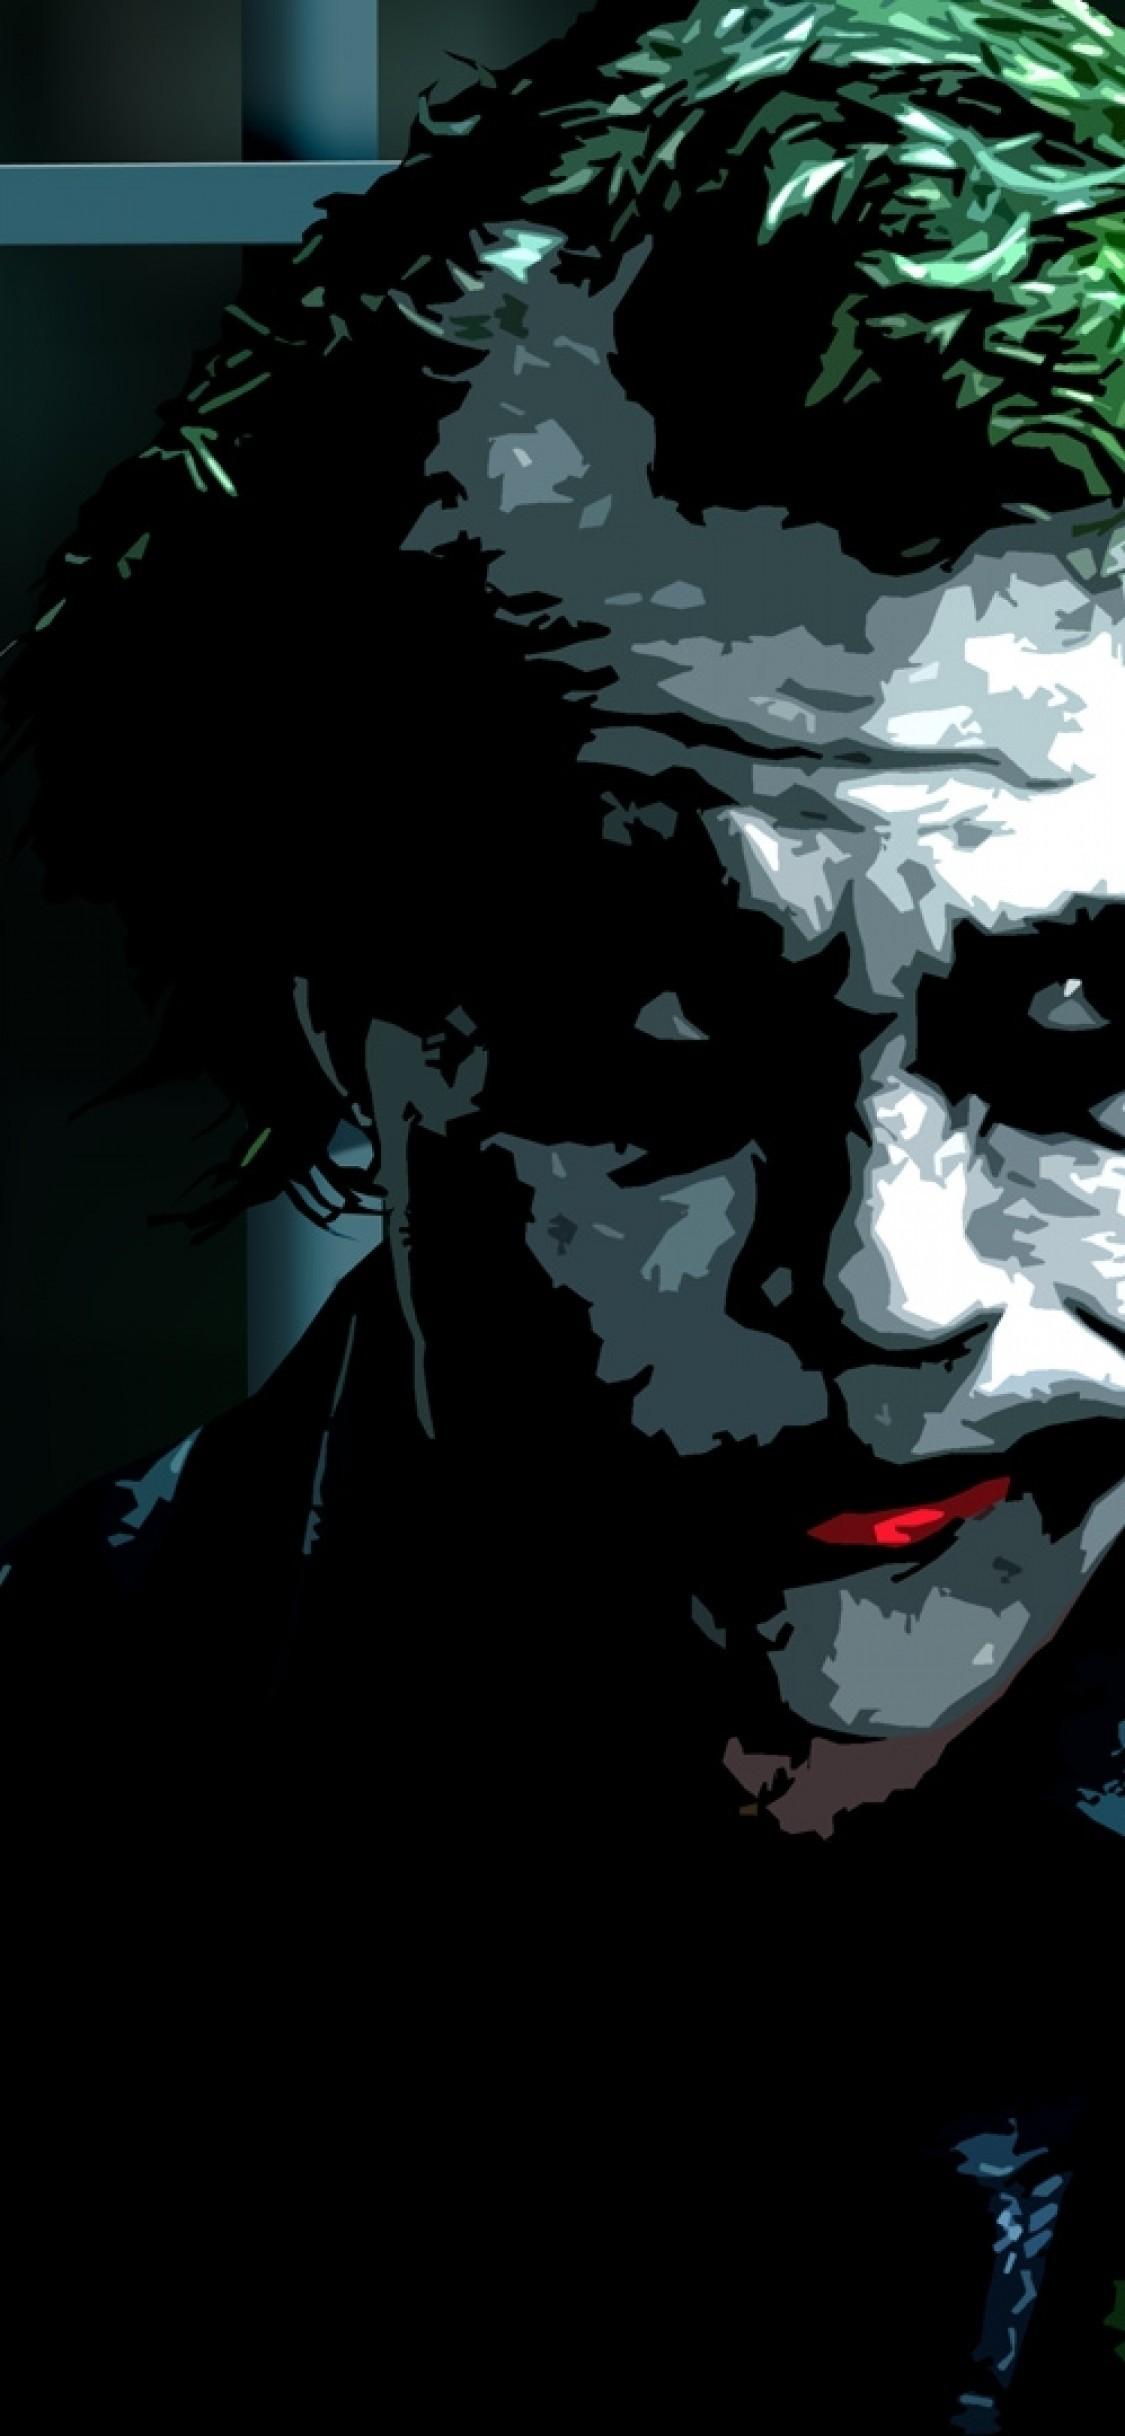 Download 1125x2436 The Dark Knight, Joker, Heath Ledger